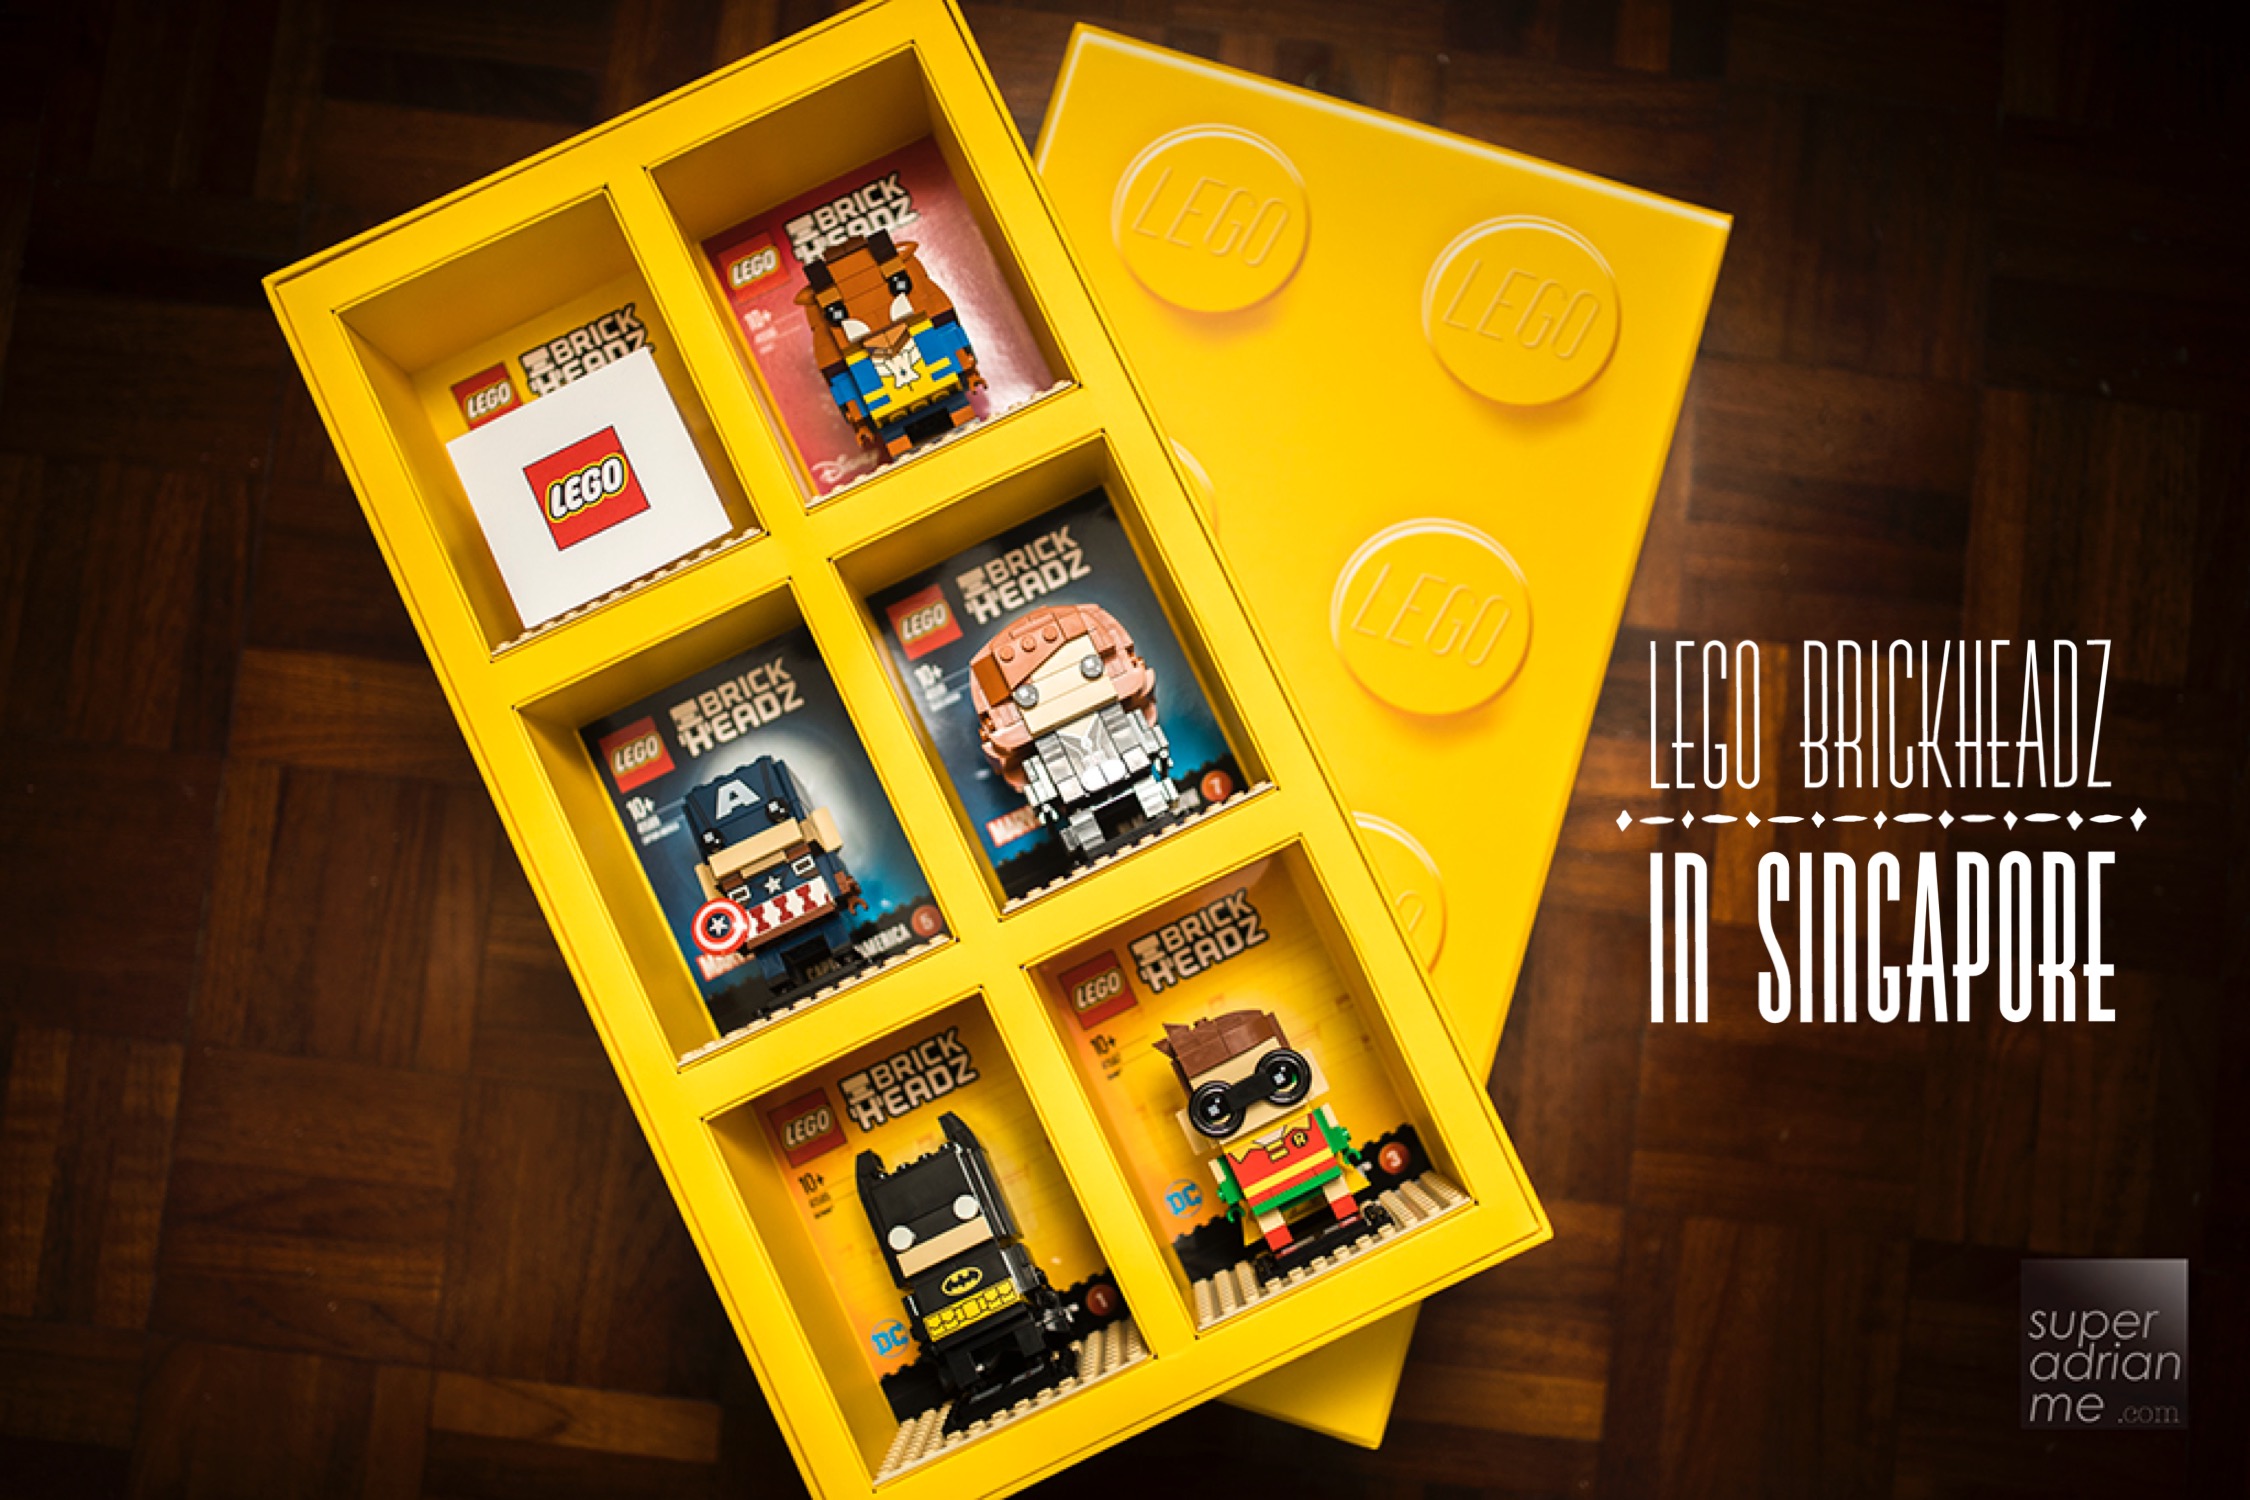 Lego BrickHeadz Arrives in Singapore